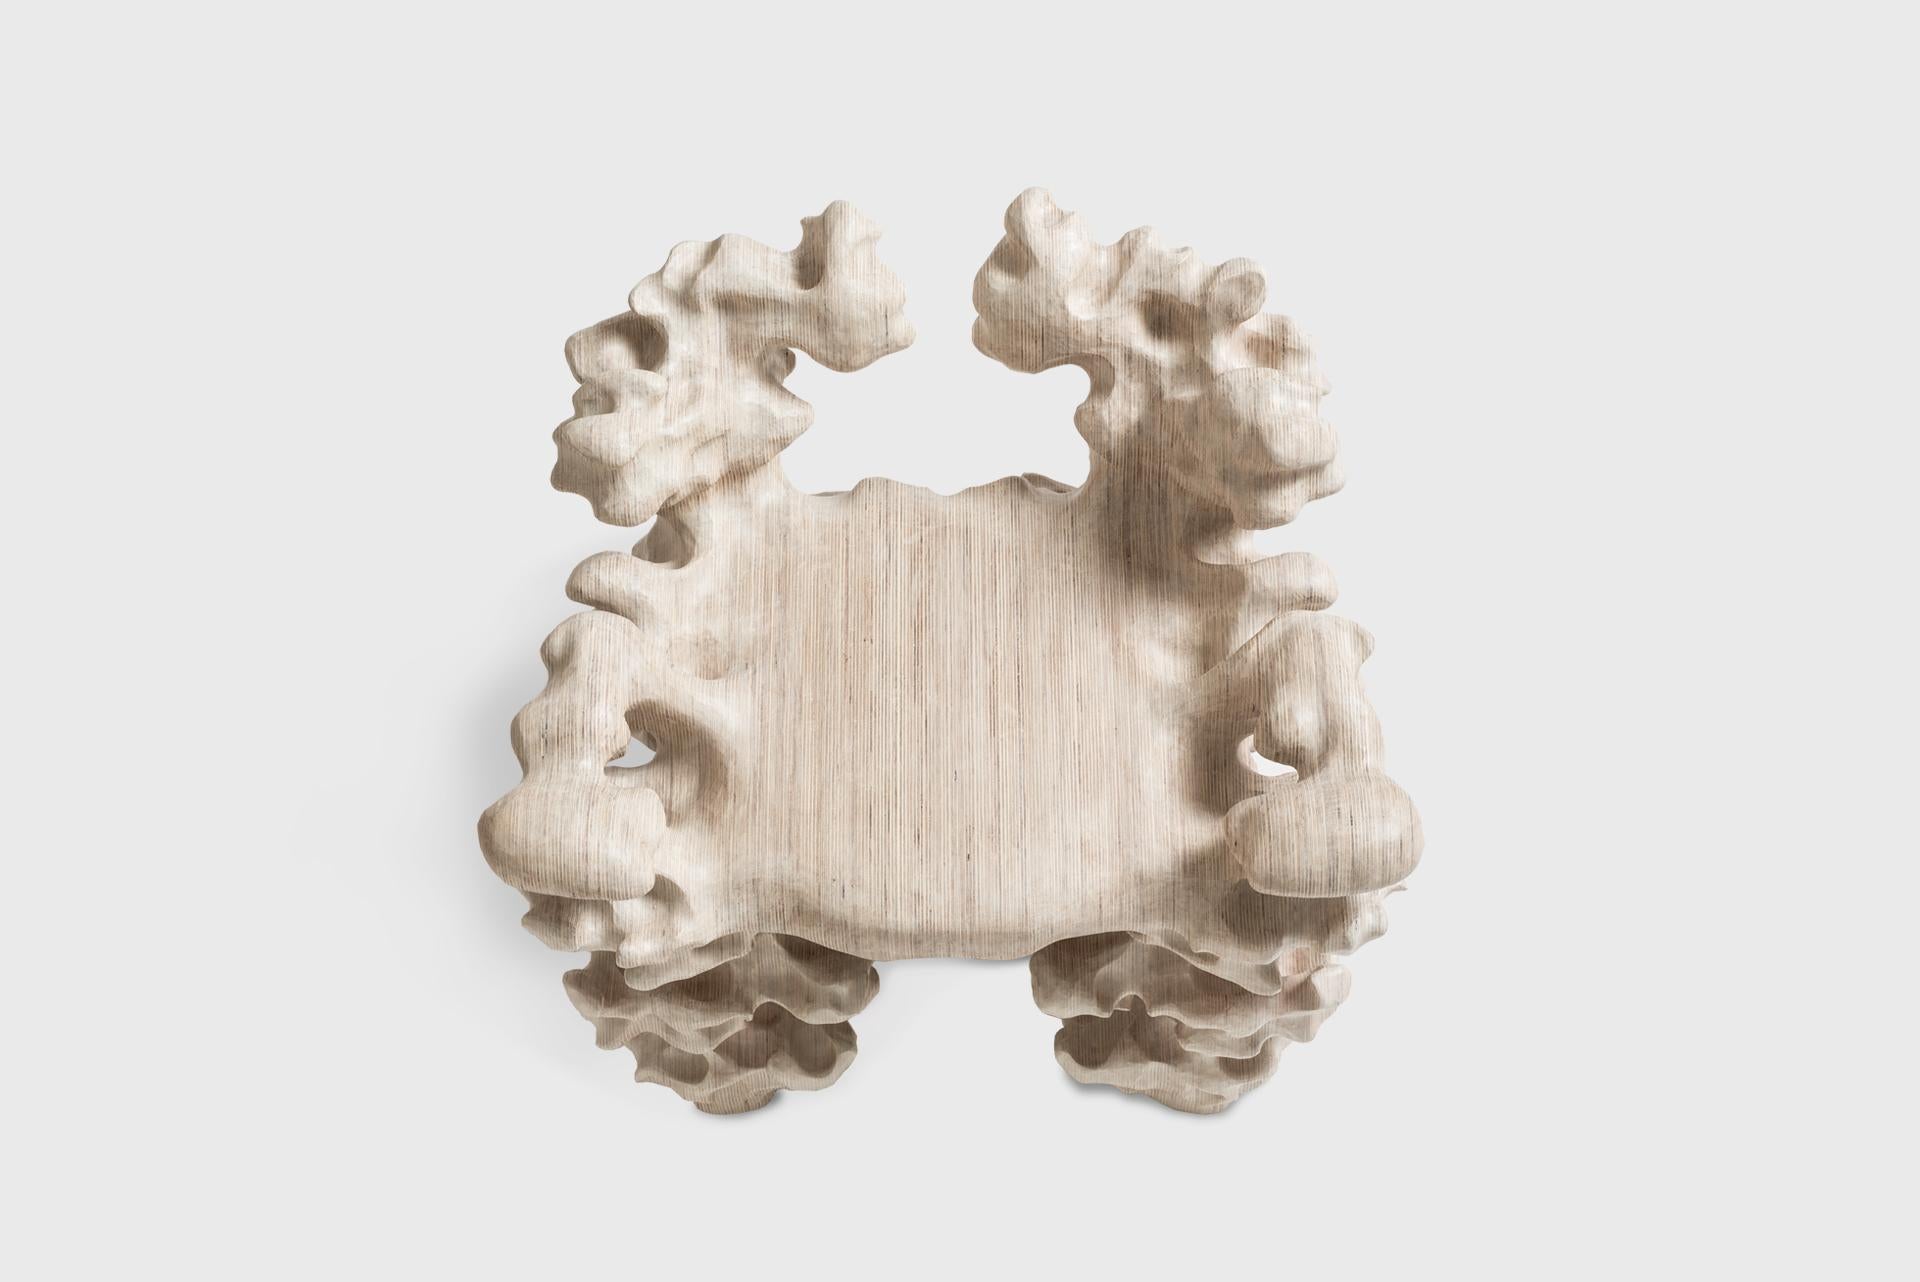 Czech Contemporary Artisanal Stool in Plain Wood, by Tadeas Podracky, Organic Shapes